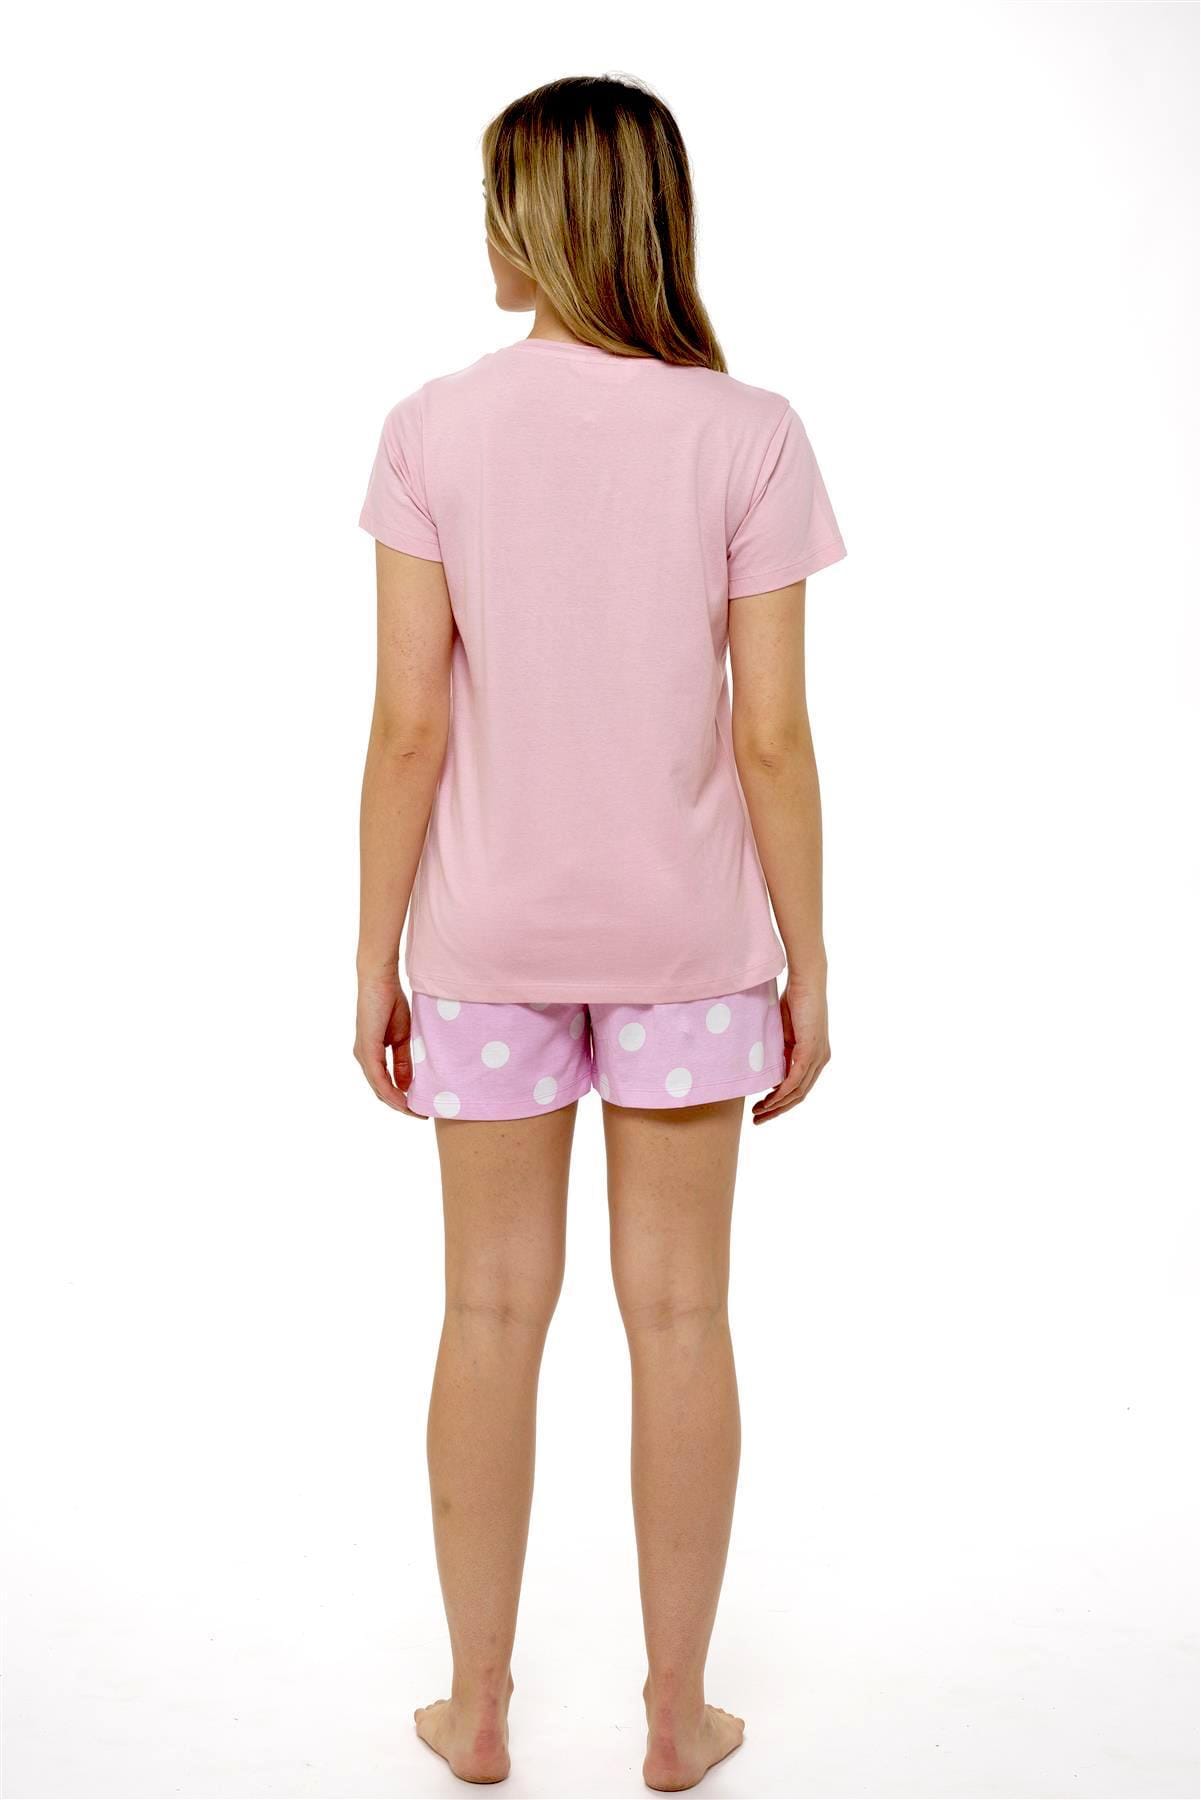 Sausage Dog T Shirt & Shorts Cotton Pyjama Set Daisy Dreamer Pyjamas